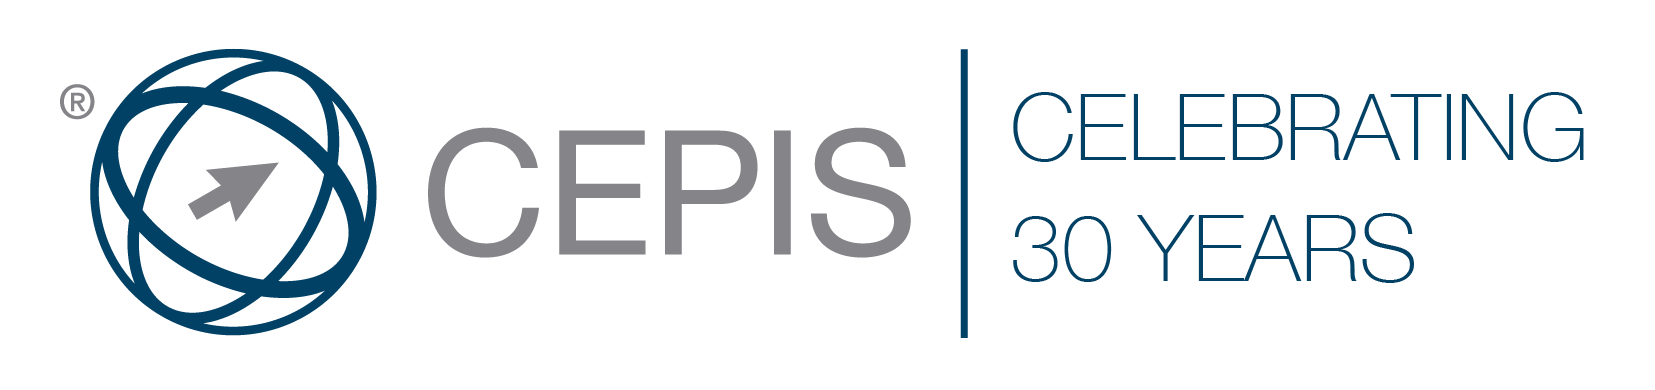 CEPIS - Council of European Professional Informatics Societies